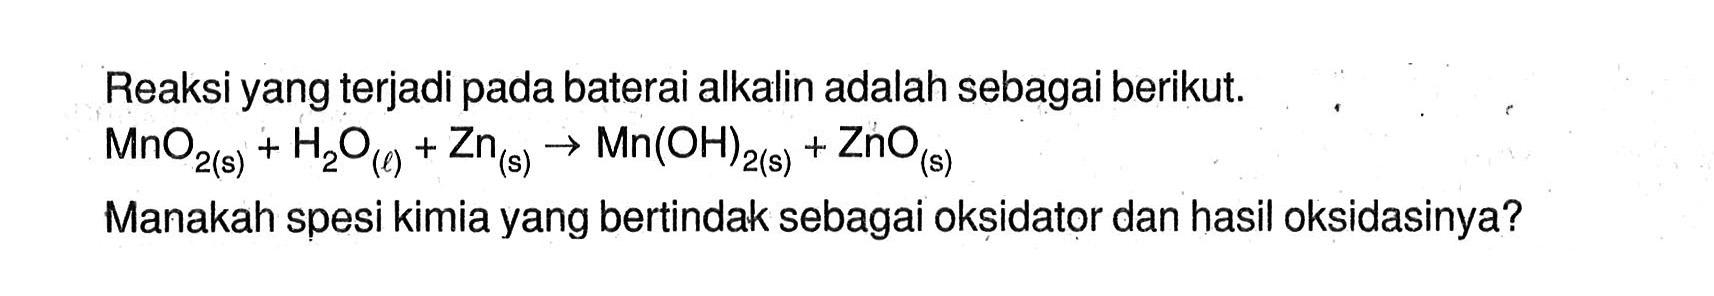 Reaksi yang terjadi pada baterai alkalin adalah sebagai berikut. MnO2 (s) + HzO (l) + Zn (s) -> Mn(OH)2 (s) + ZnO(s) Manakah spesi kimia yang bertindak sebagai oksidator dan hasil oksidasinya?